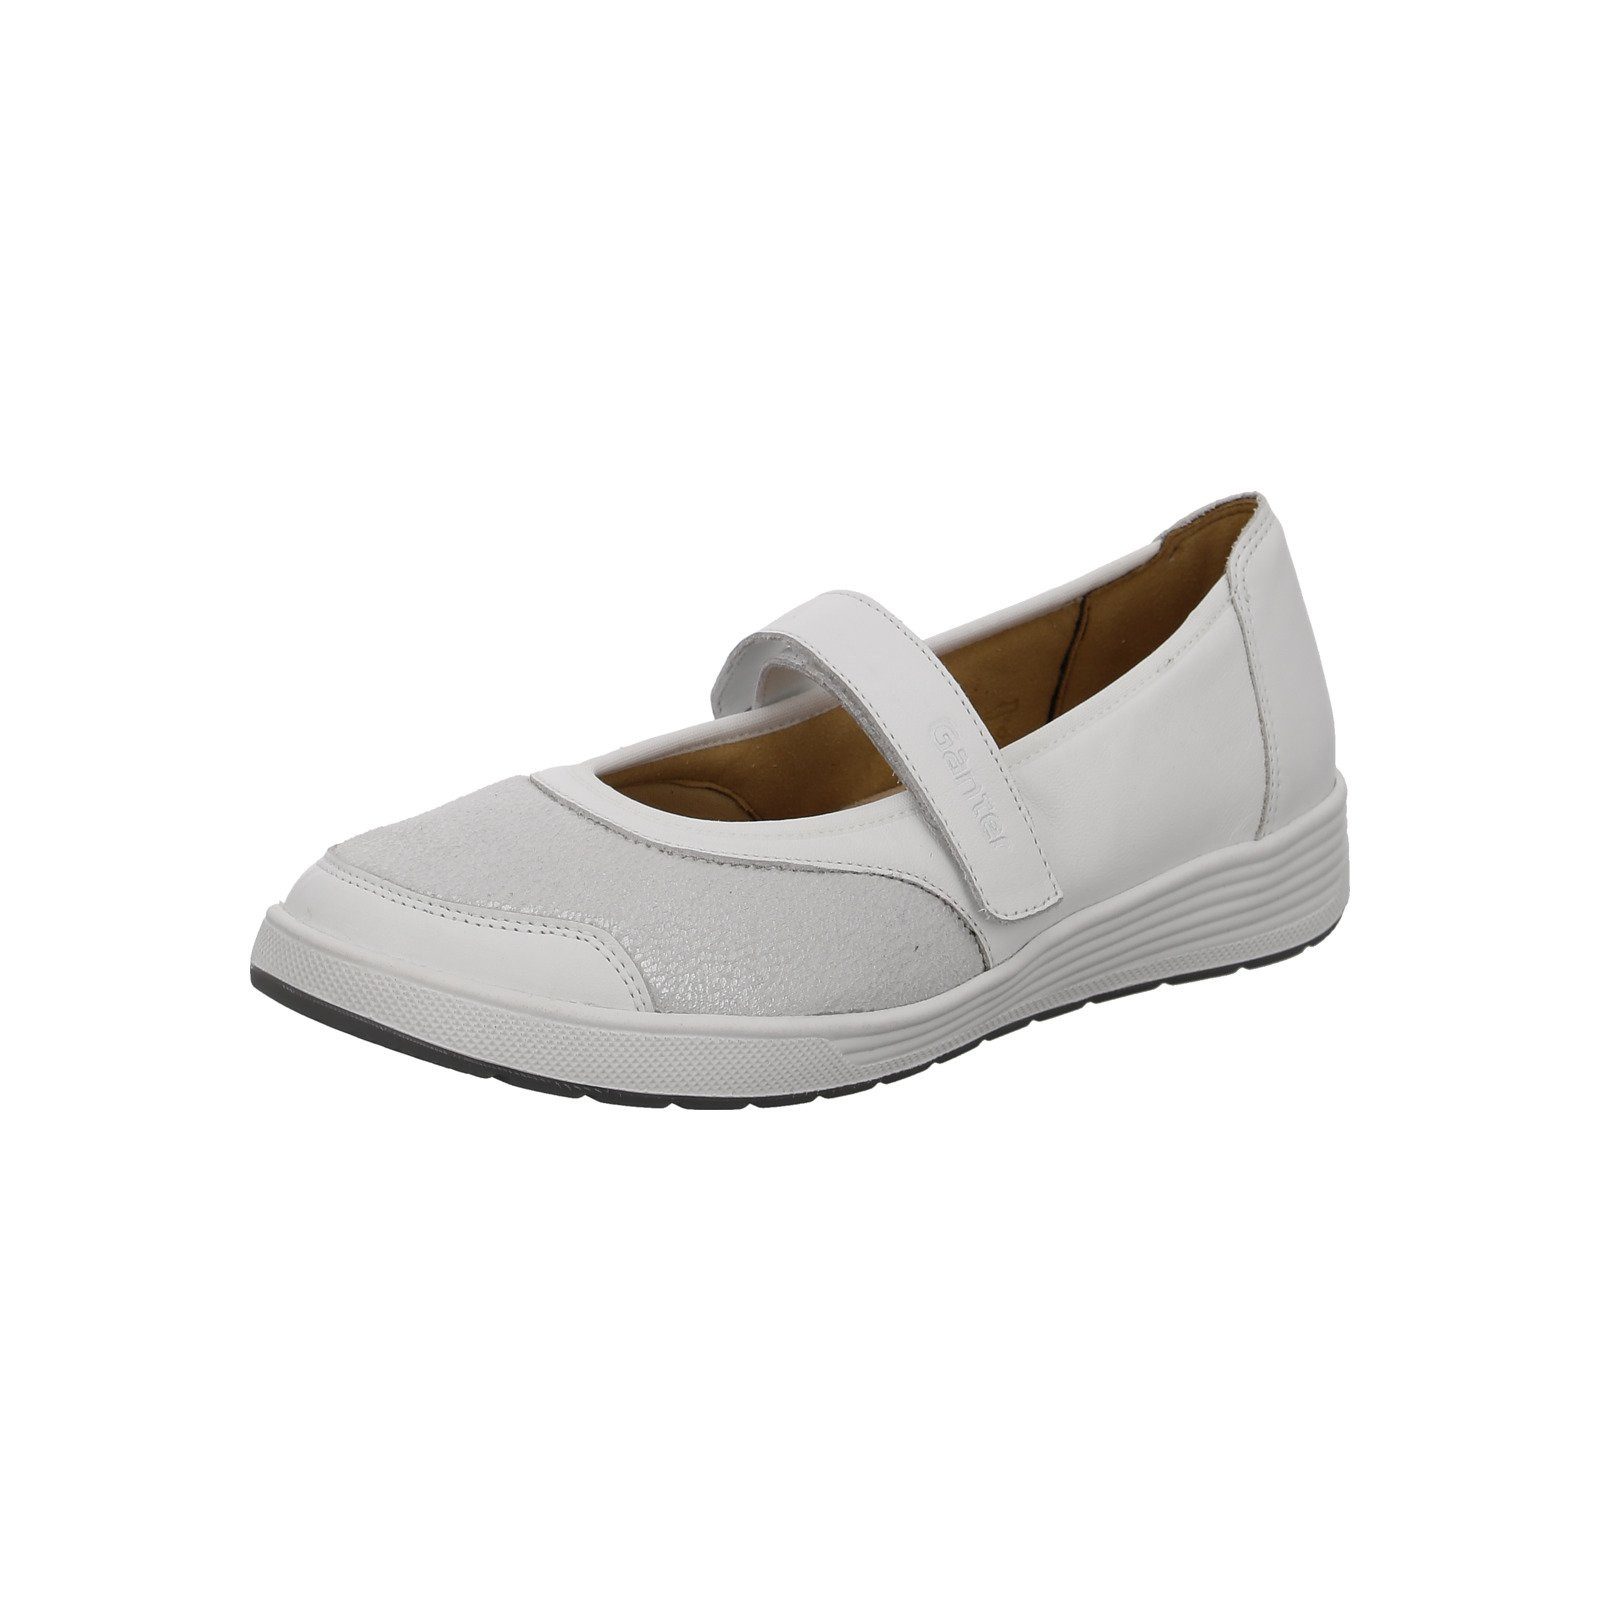 Ganter Klara - Damen Schuhe Slipper weiß